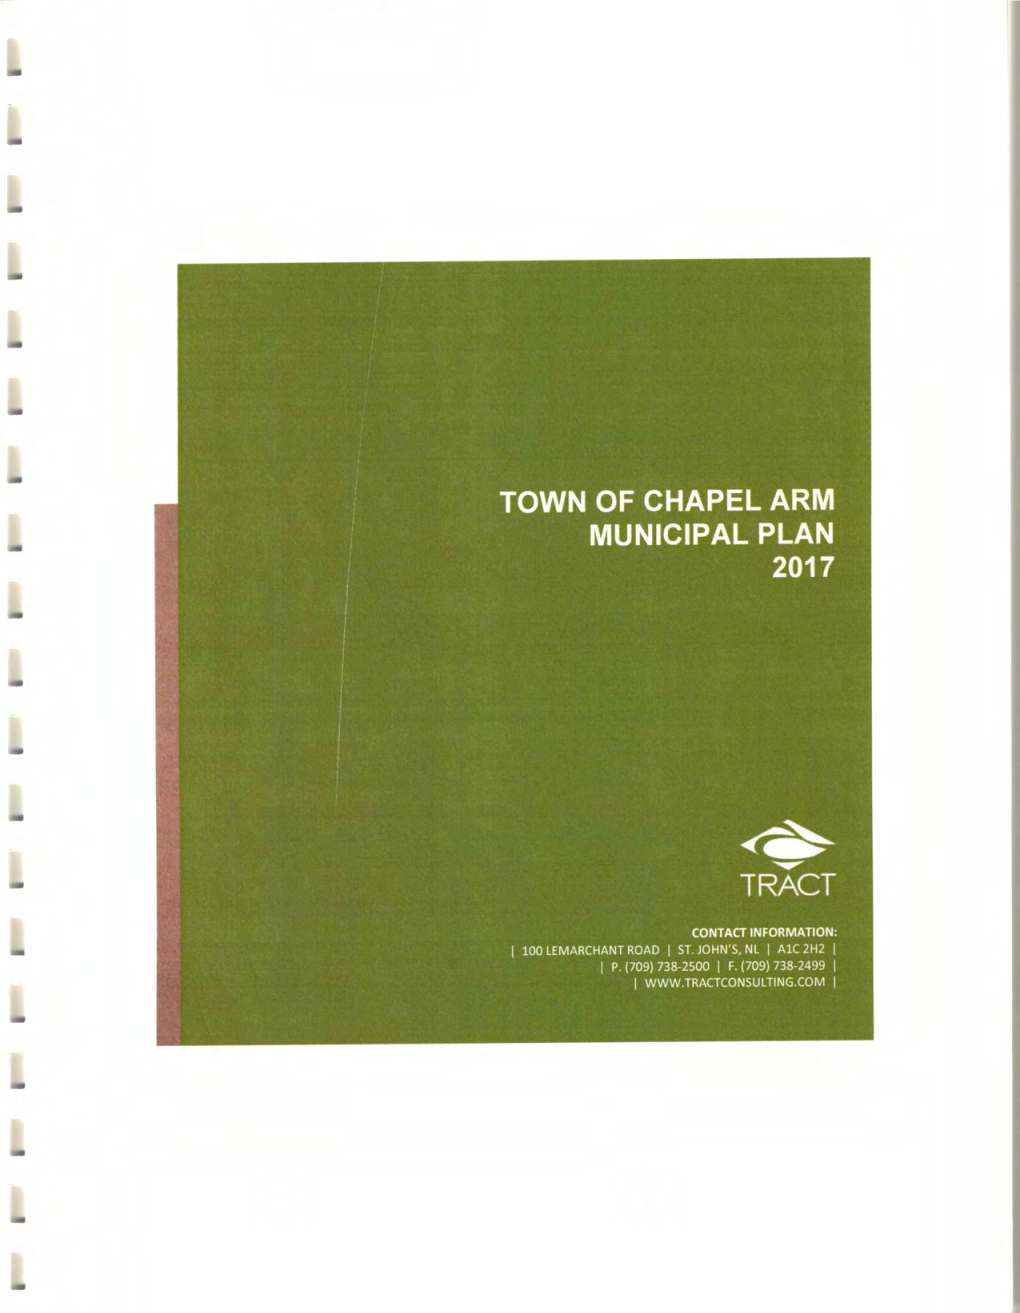 Town of Chapel Arm Municipal Plan 2017 Tract